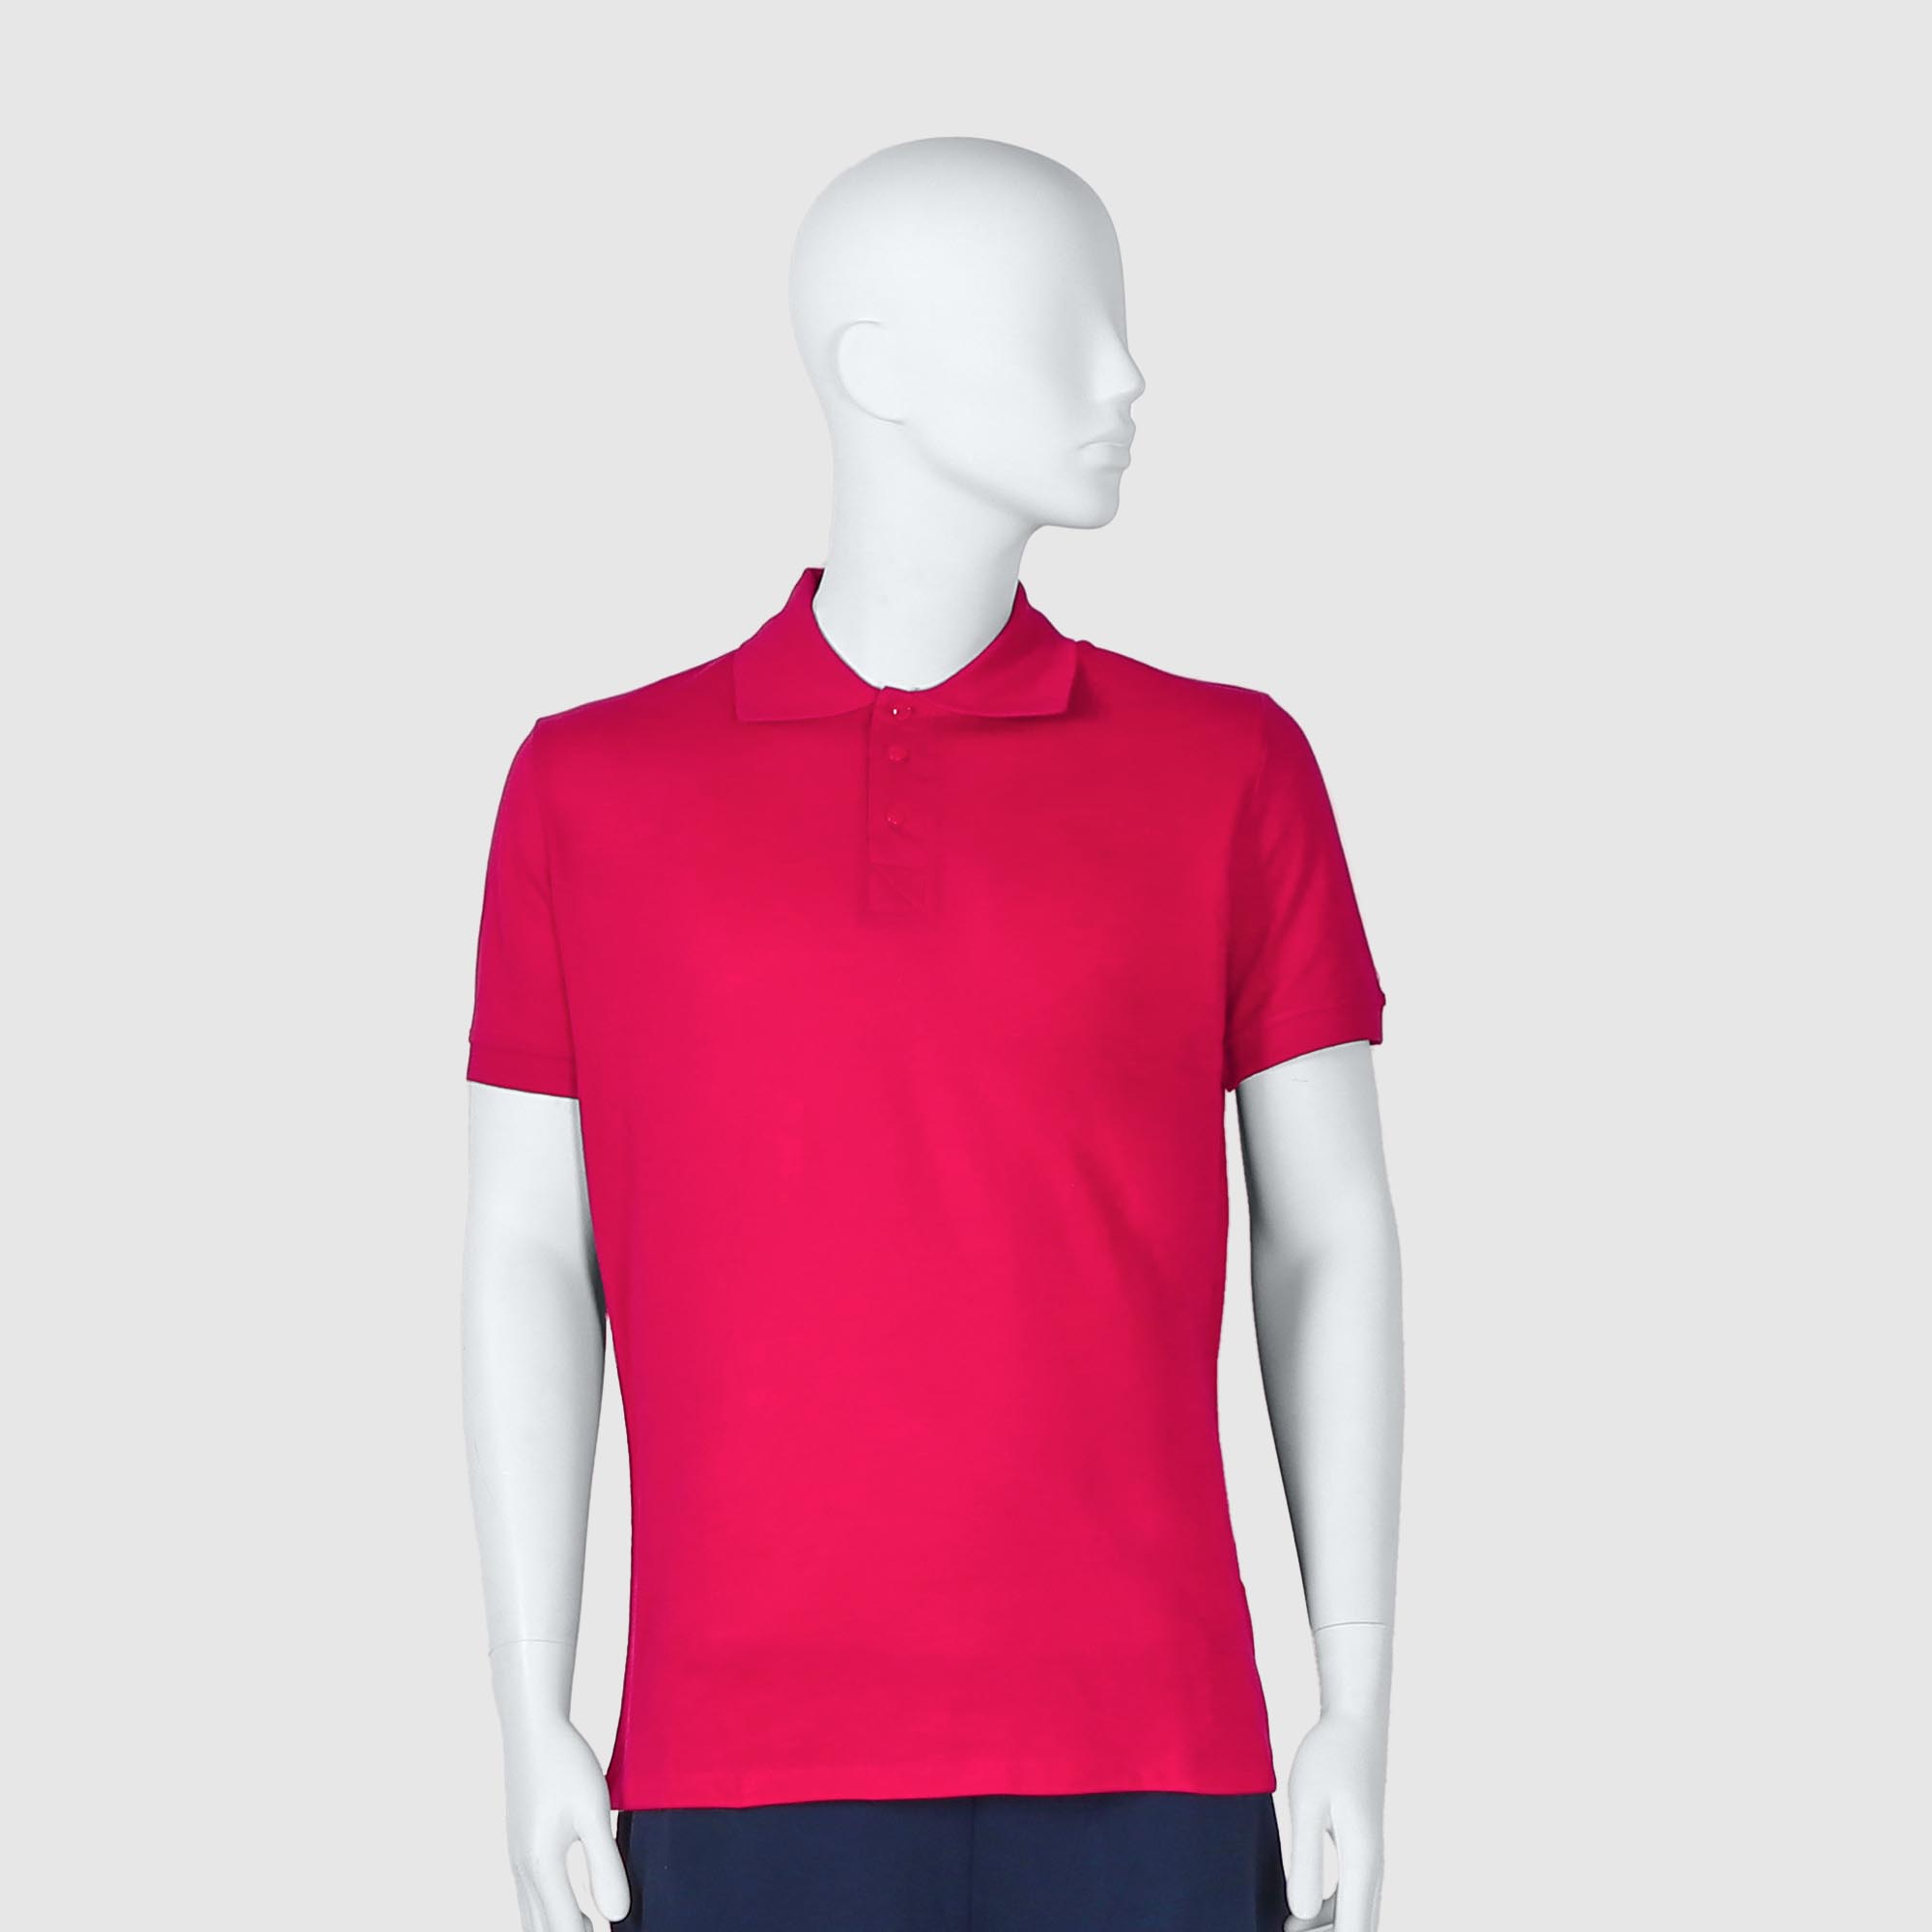 Мужская футболка-поло Diva Teks красная (DTD-08), цвет красный, размер 48-50